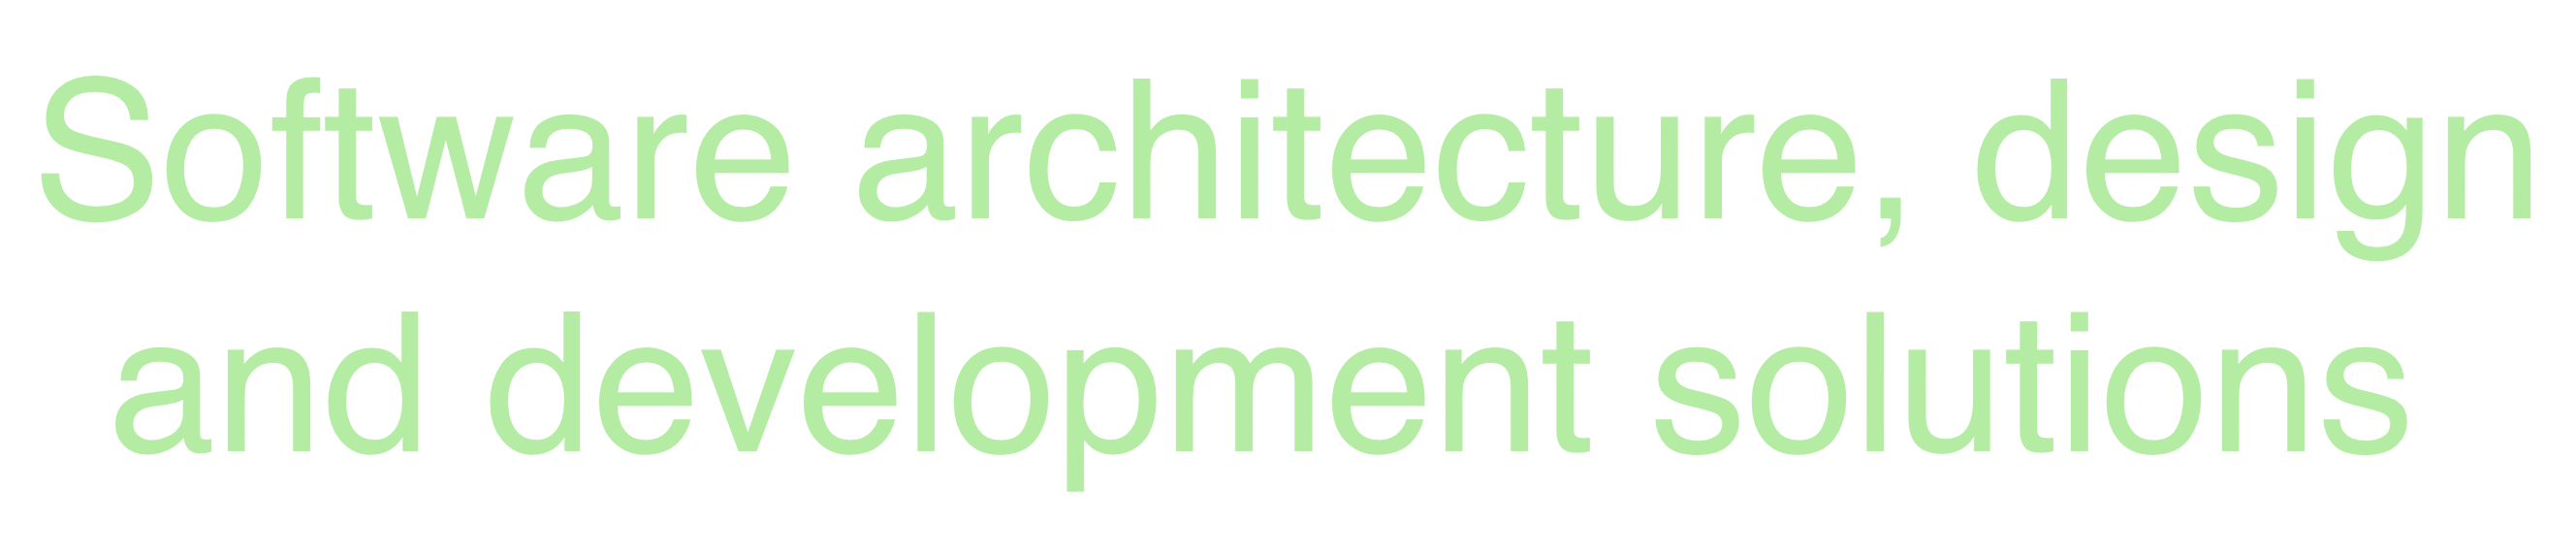 Software architecture, design and development solution